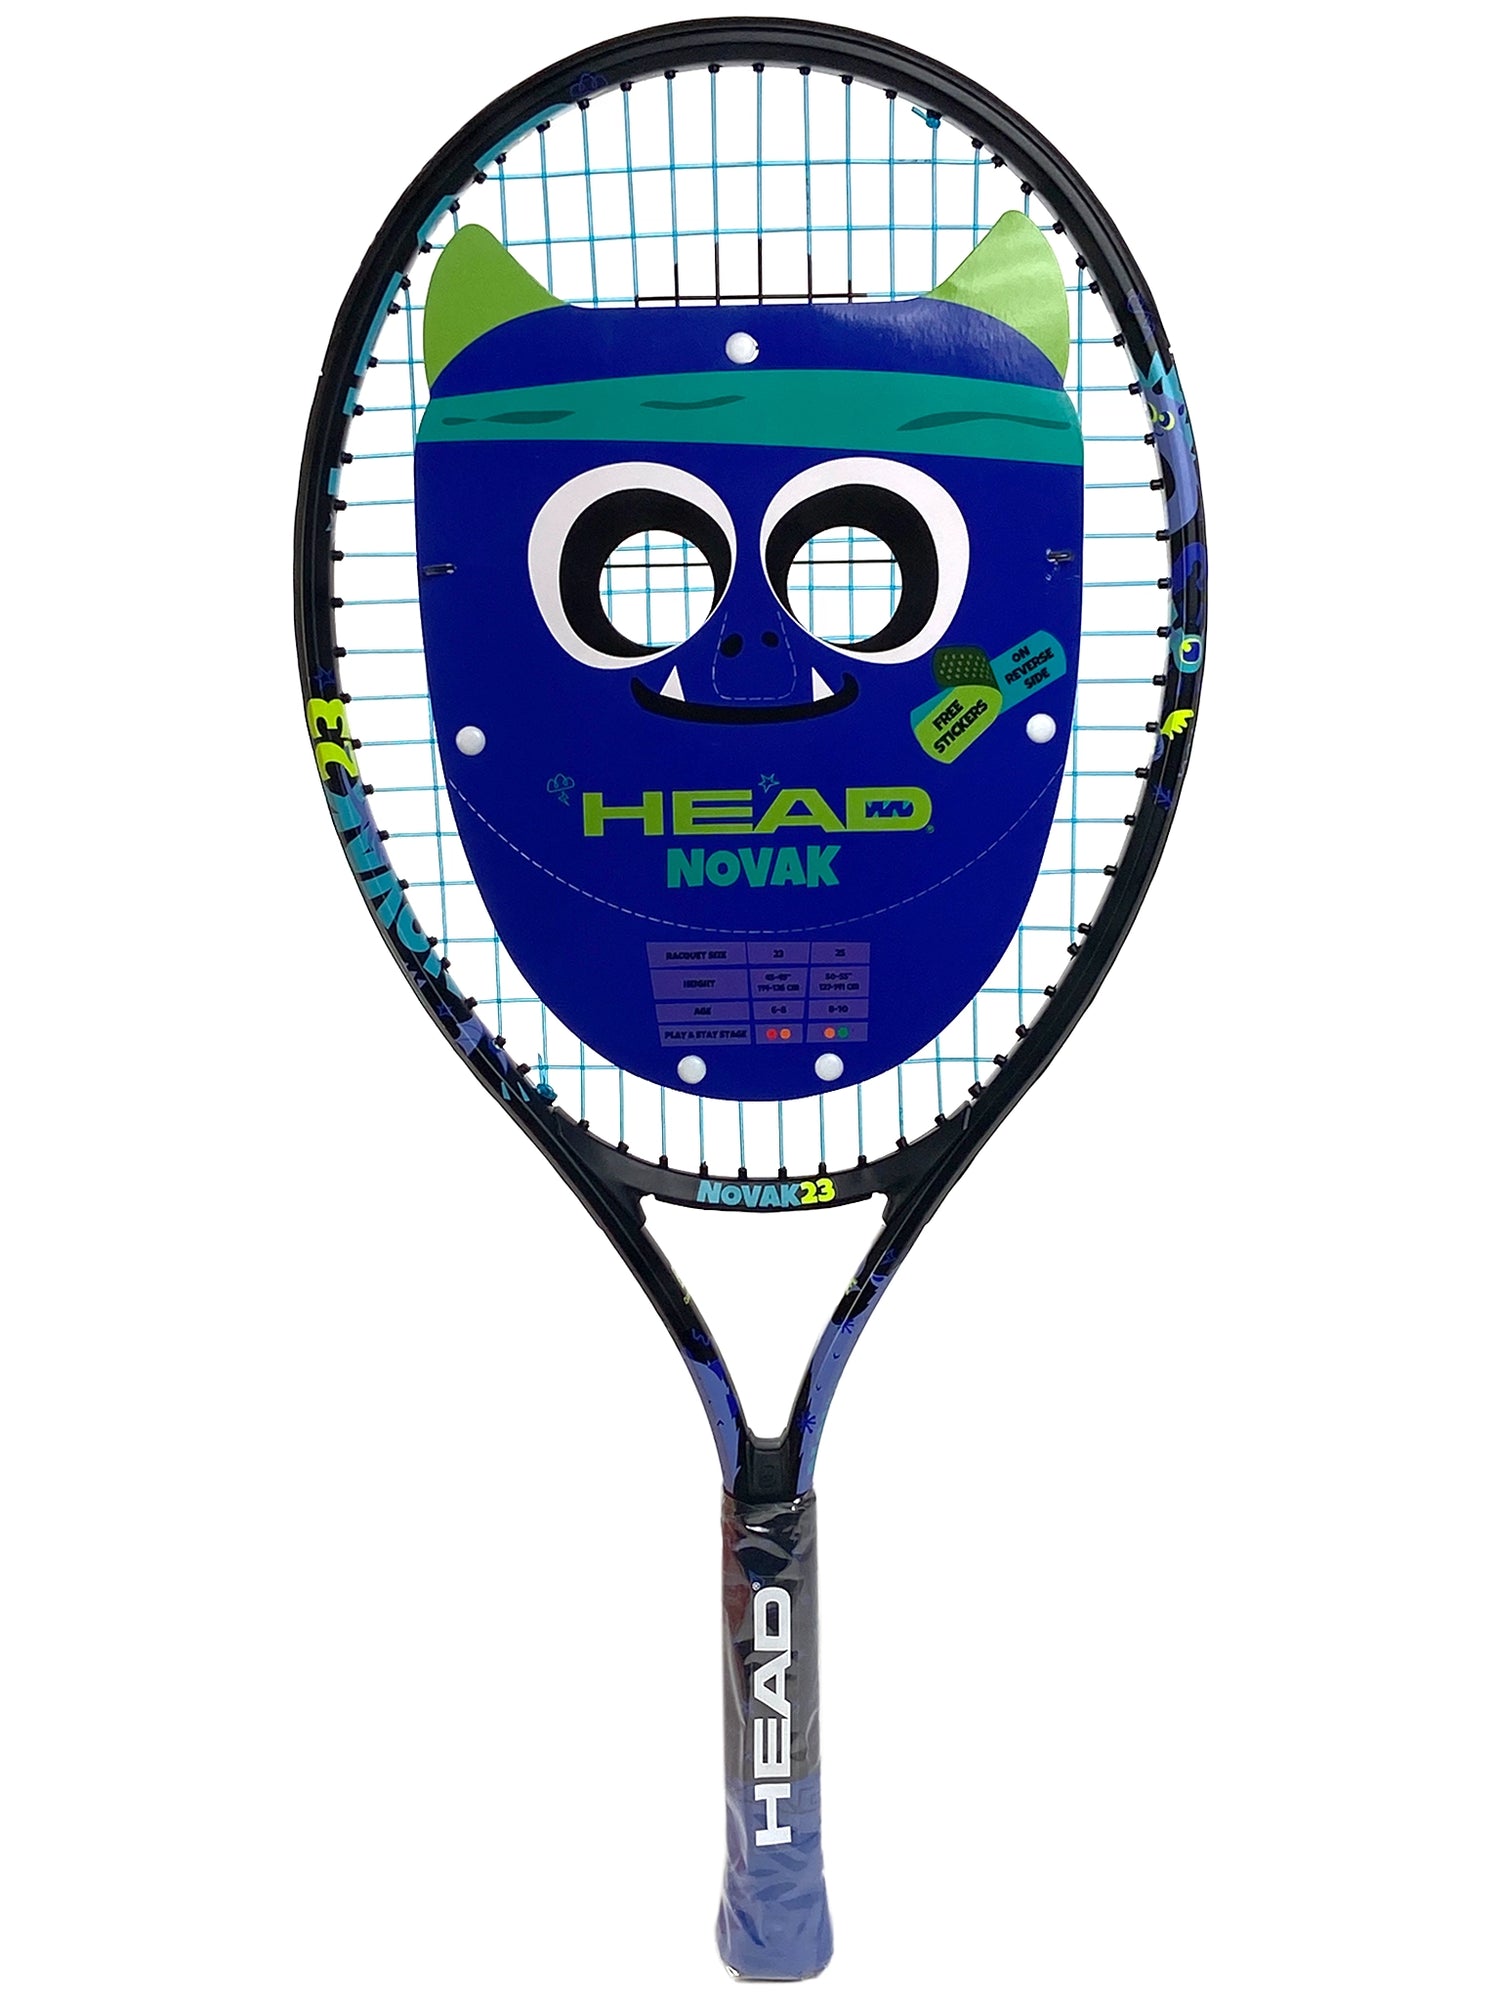 New Junior Racquets